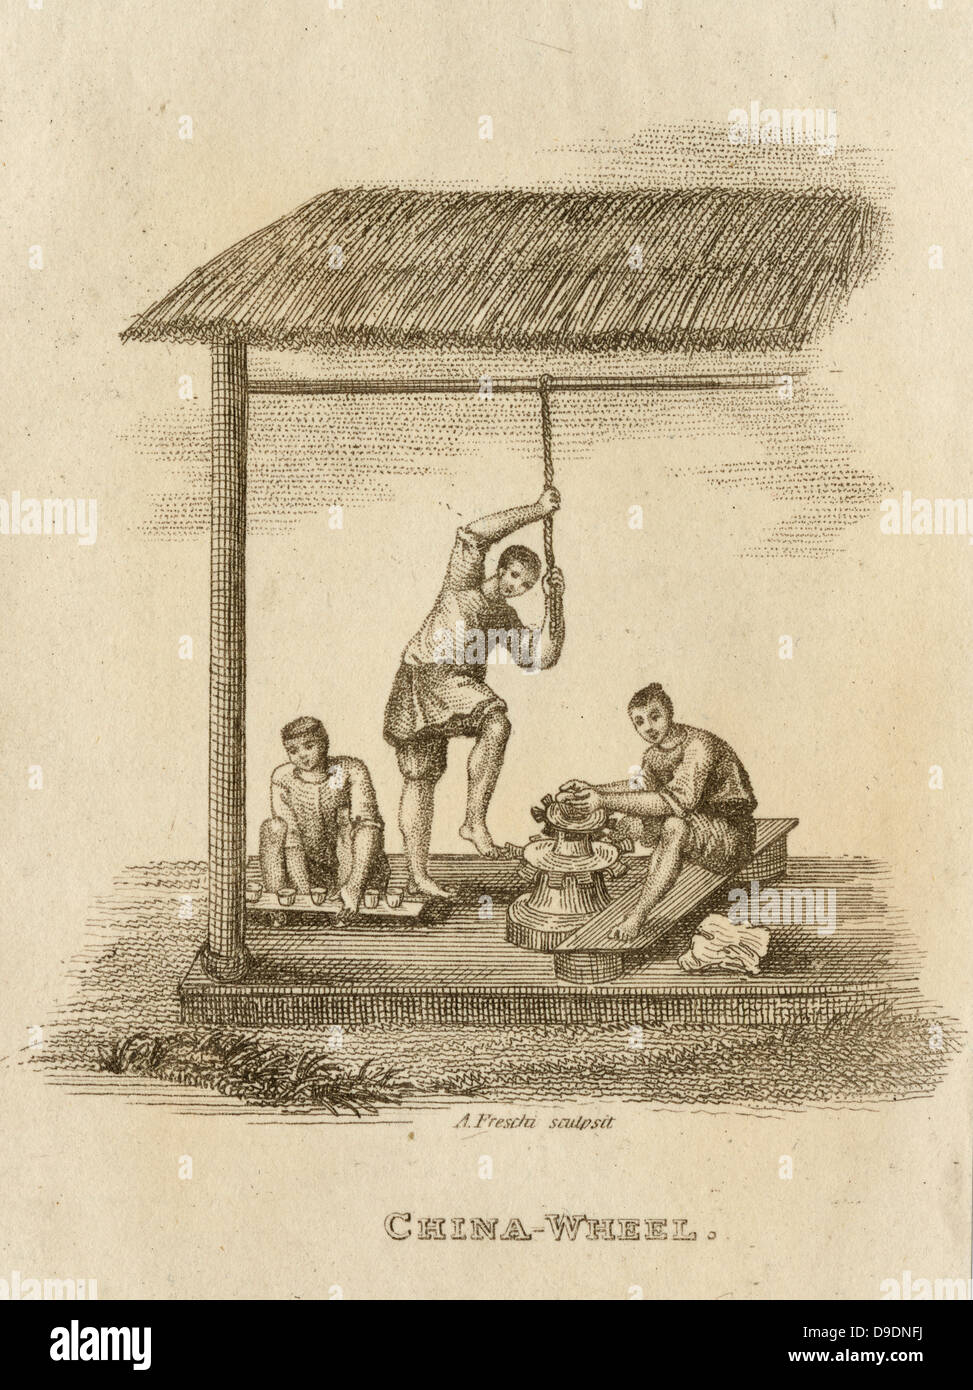 Production of ceramics using a kick wheel  -  China. Engraving, 1812. Stock Photo